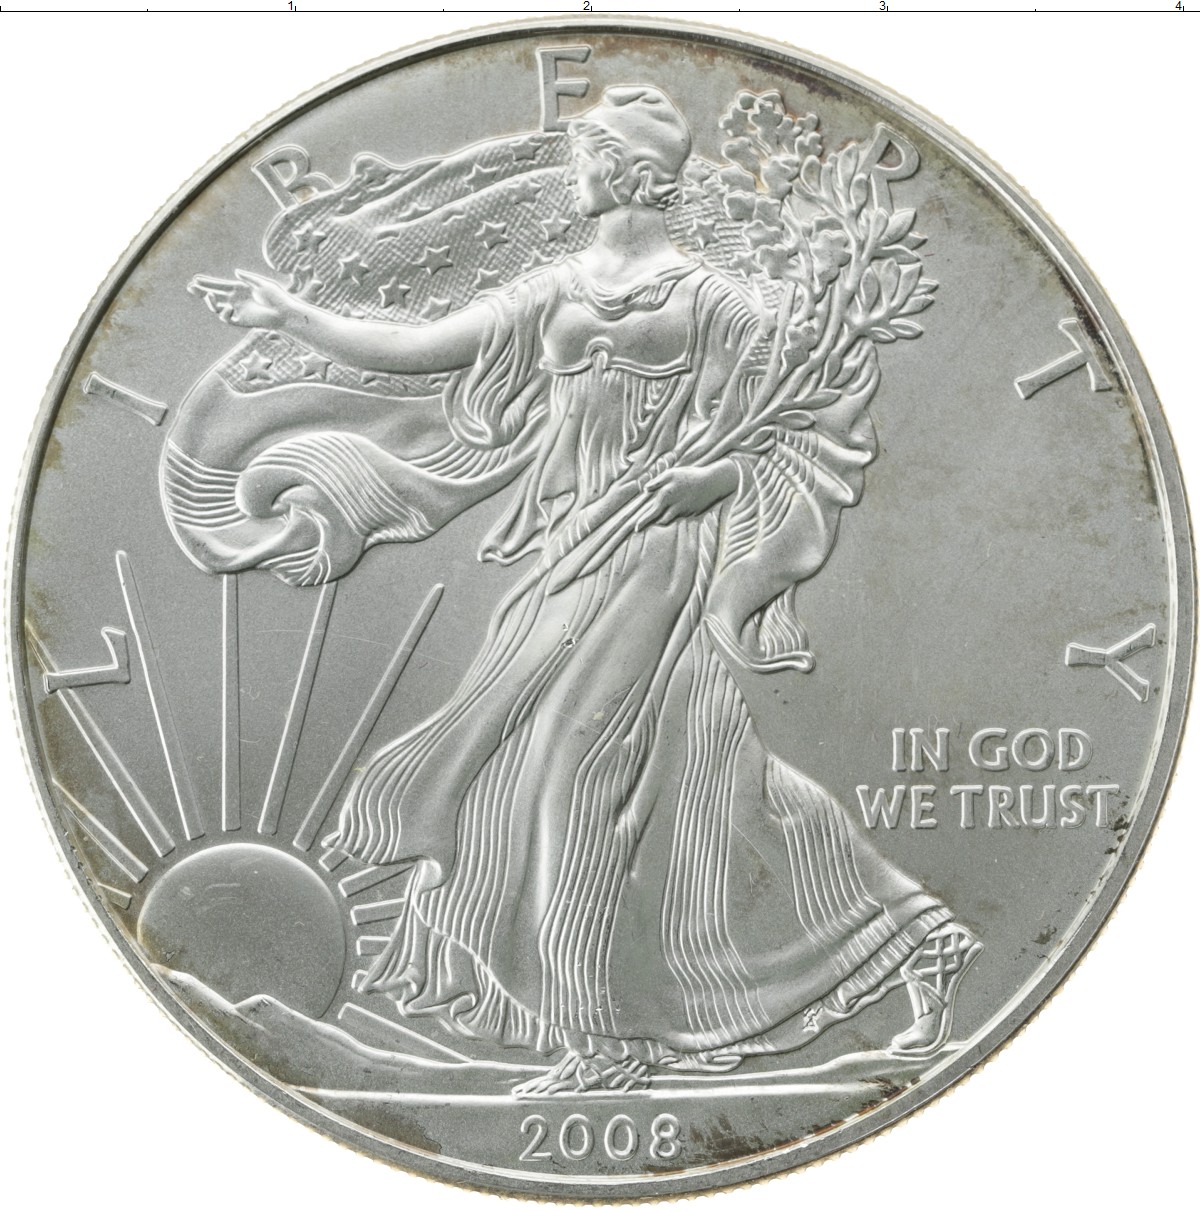 Доллар серебро купить. Монета 1 доллар США. США 1 доллар (Dollar) серебро 2008. Шагающая Свобода монета 1 доллар 1903. 1 Доллар монета серебро.